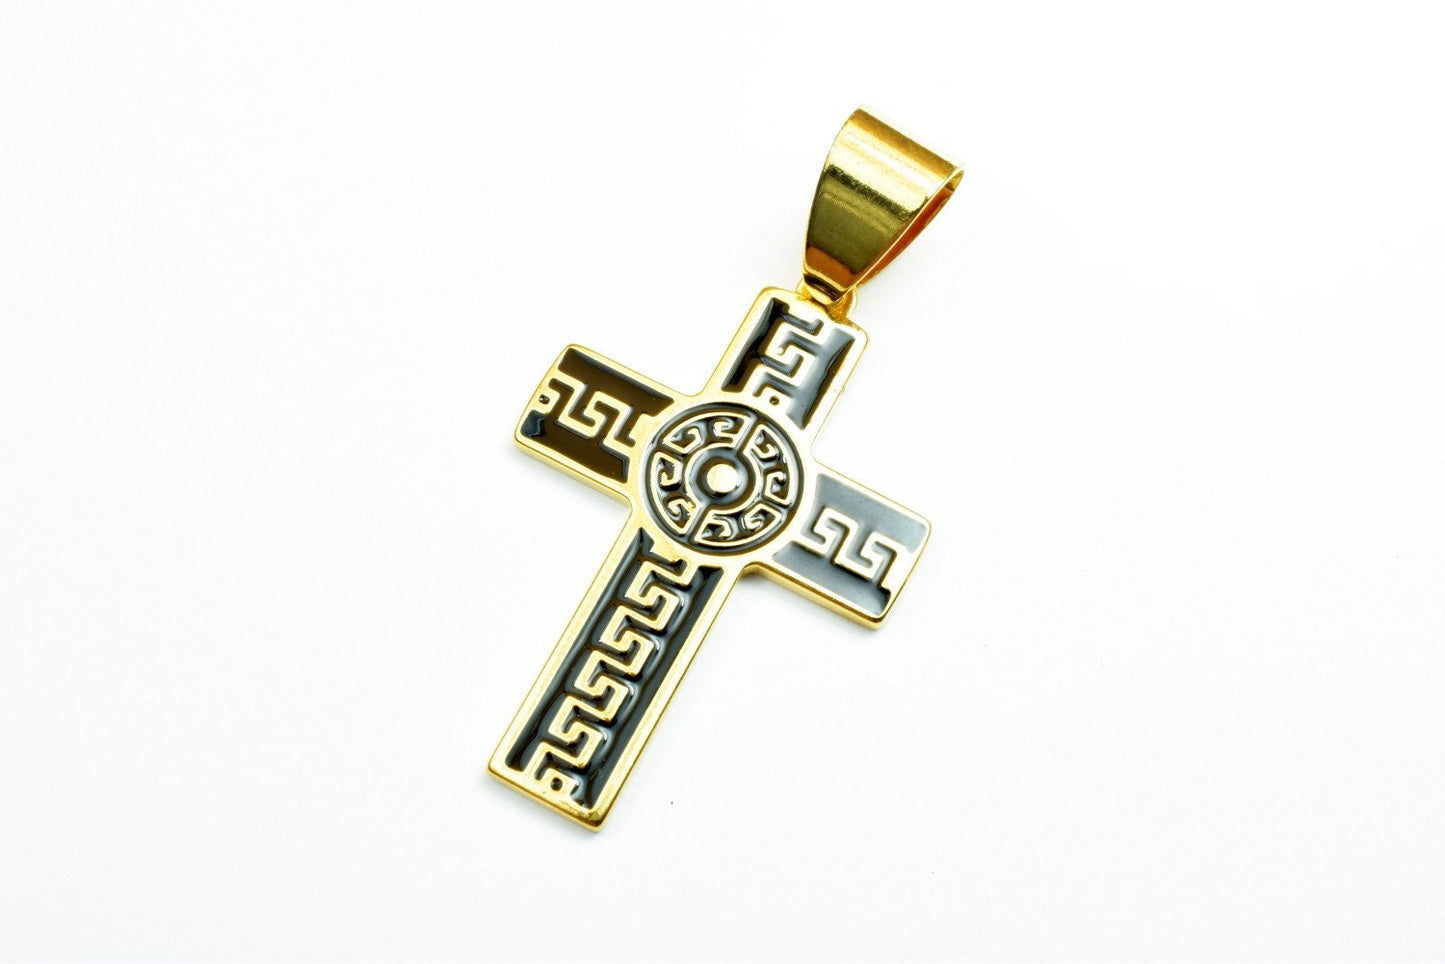 18K Gold Filled Black Enamel Cross Pendant Diamond Cut Size 38x25mm Chirstian Religious Cross Charm For Jewelry Making